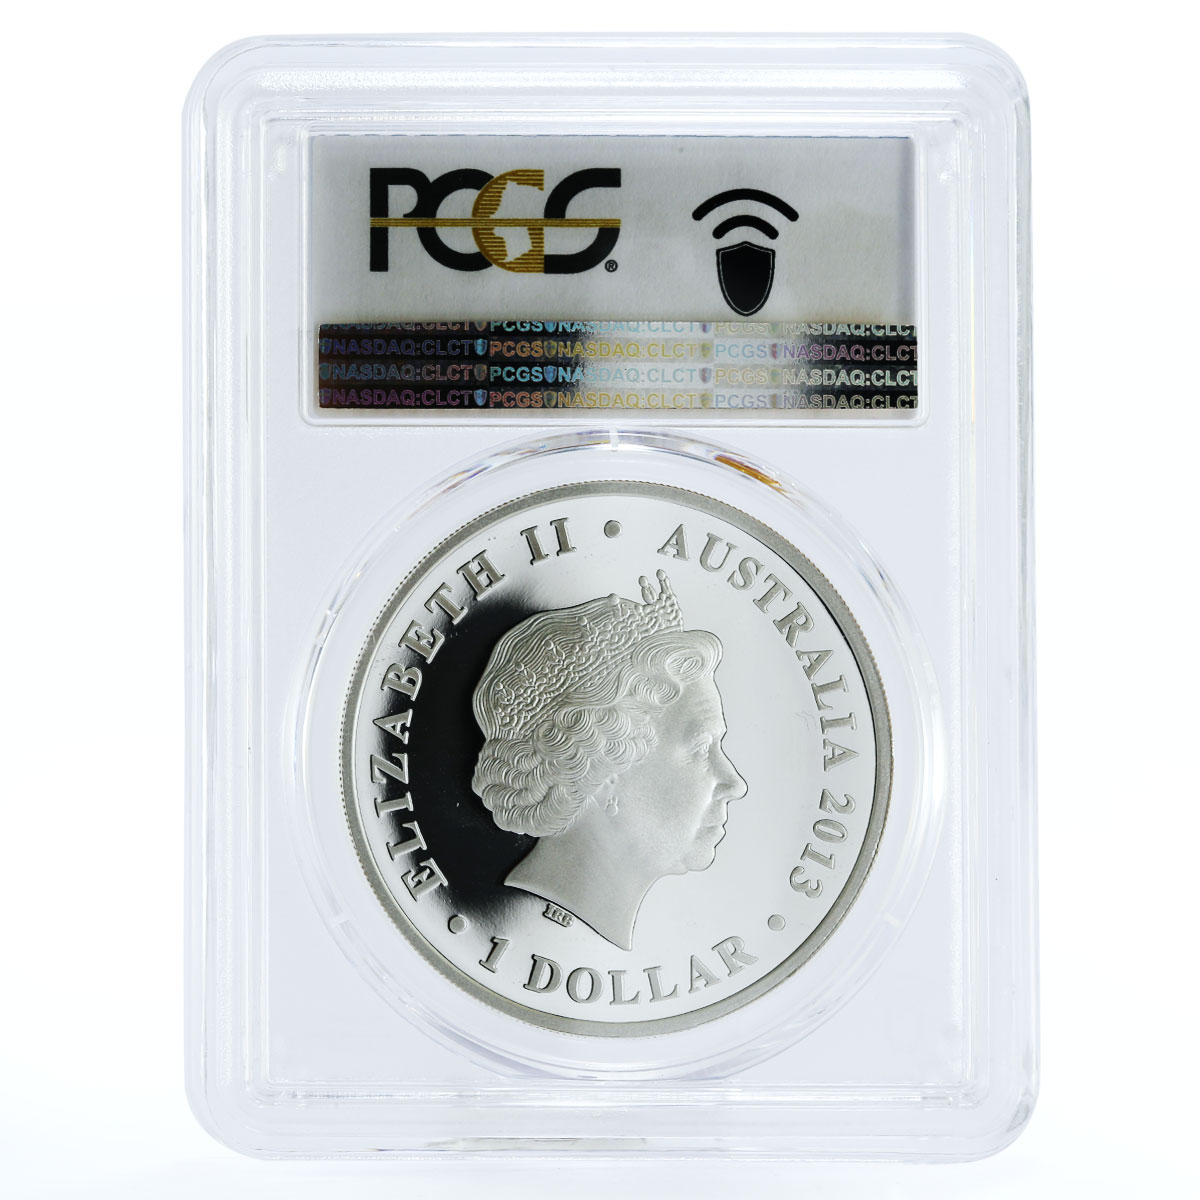 Australia 1 dollar Sydney Opera House PR70 PCGS silver coin 2013